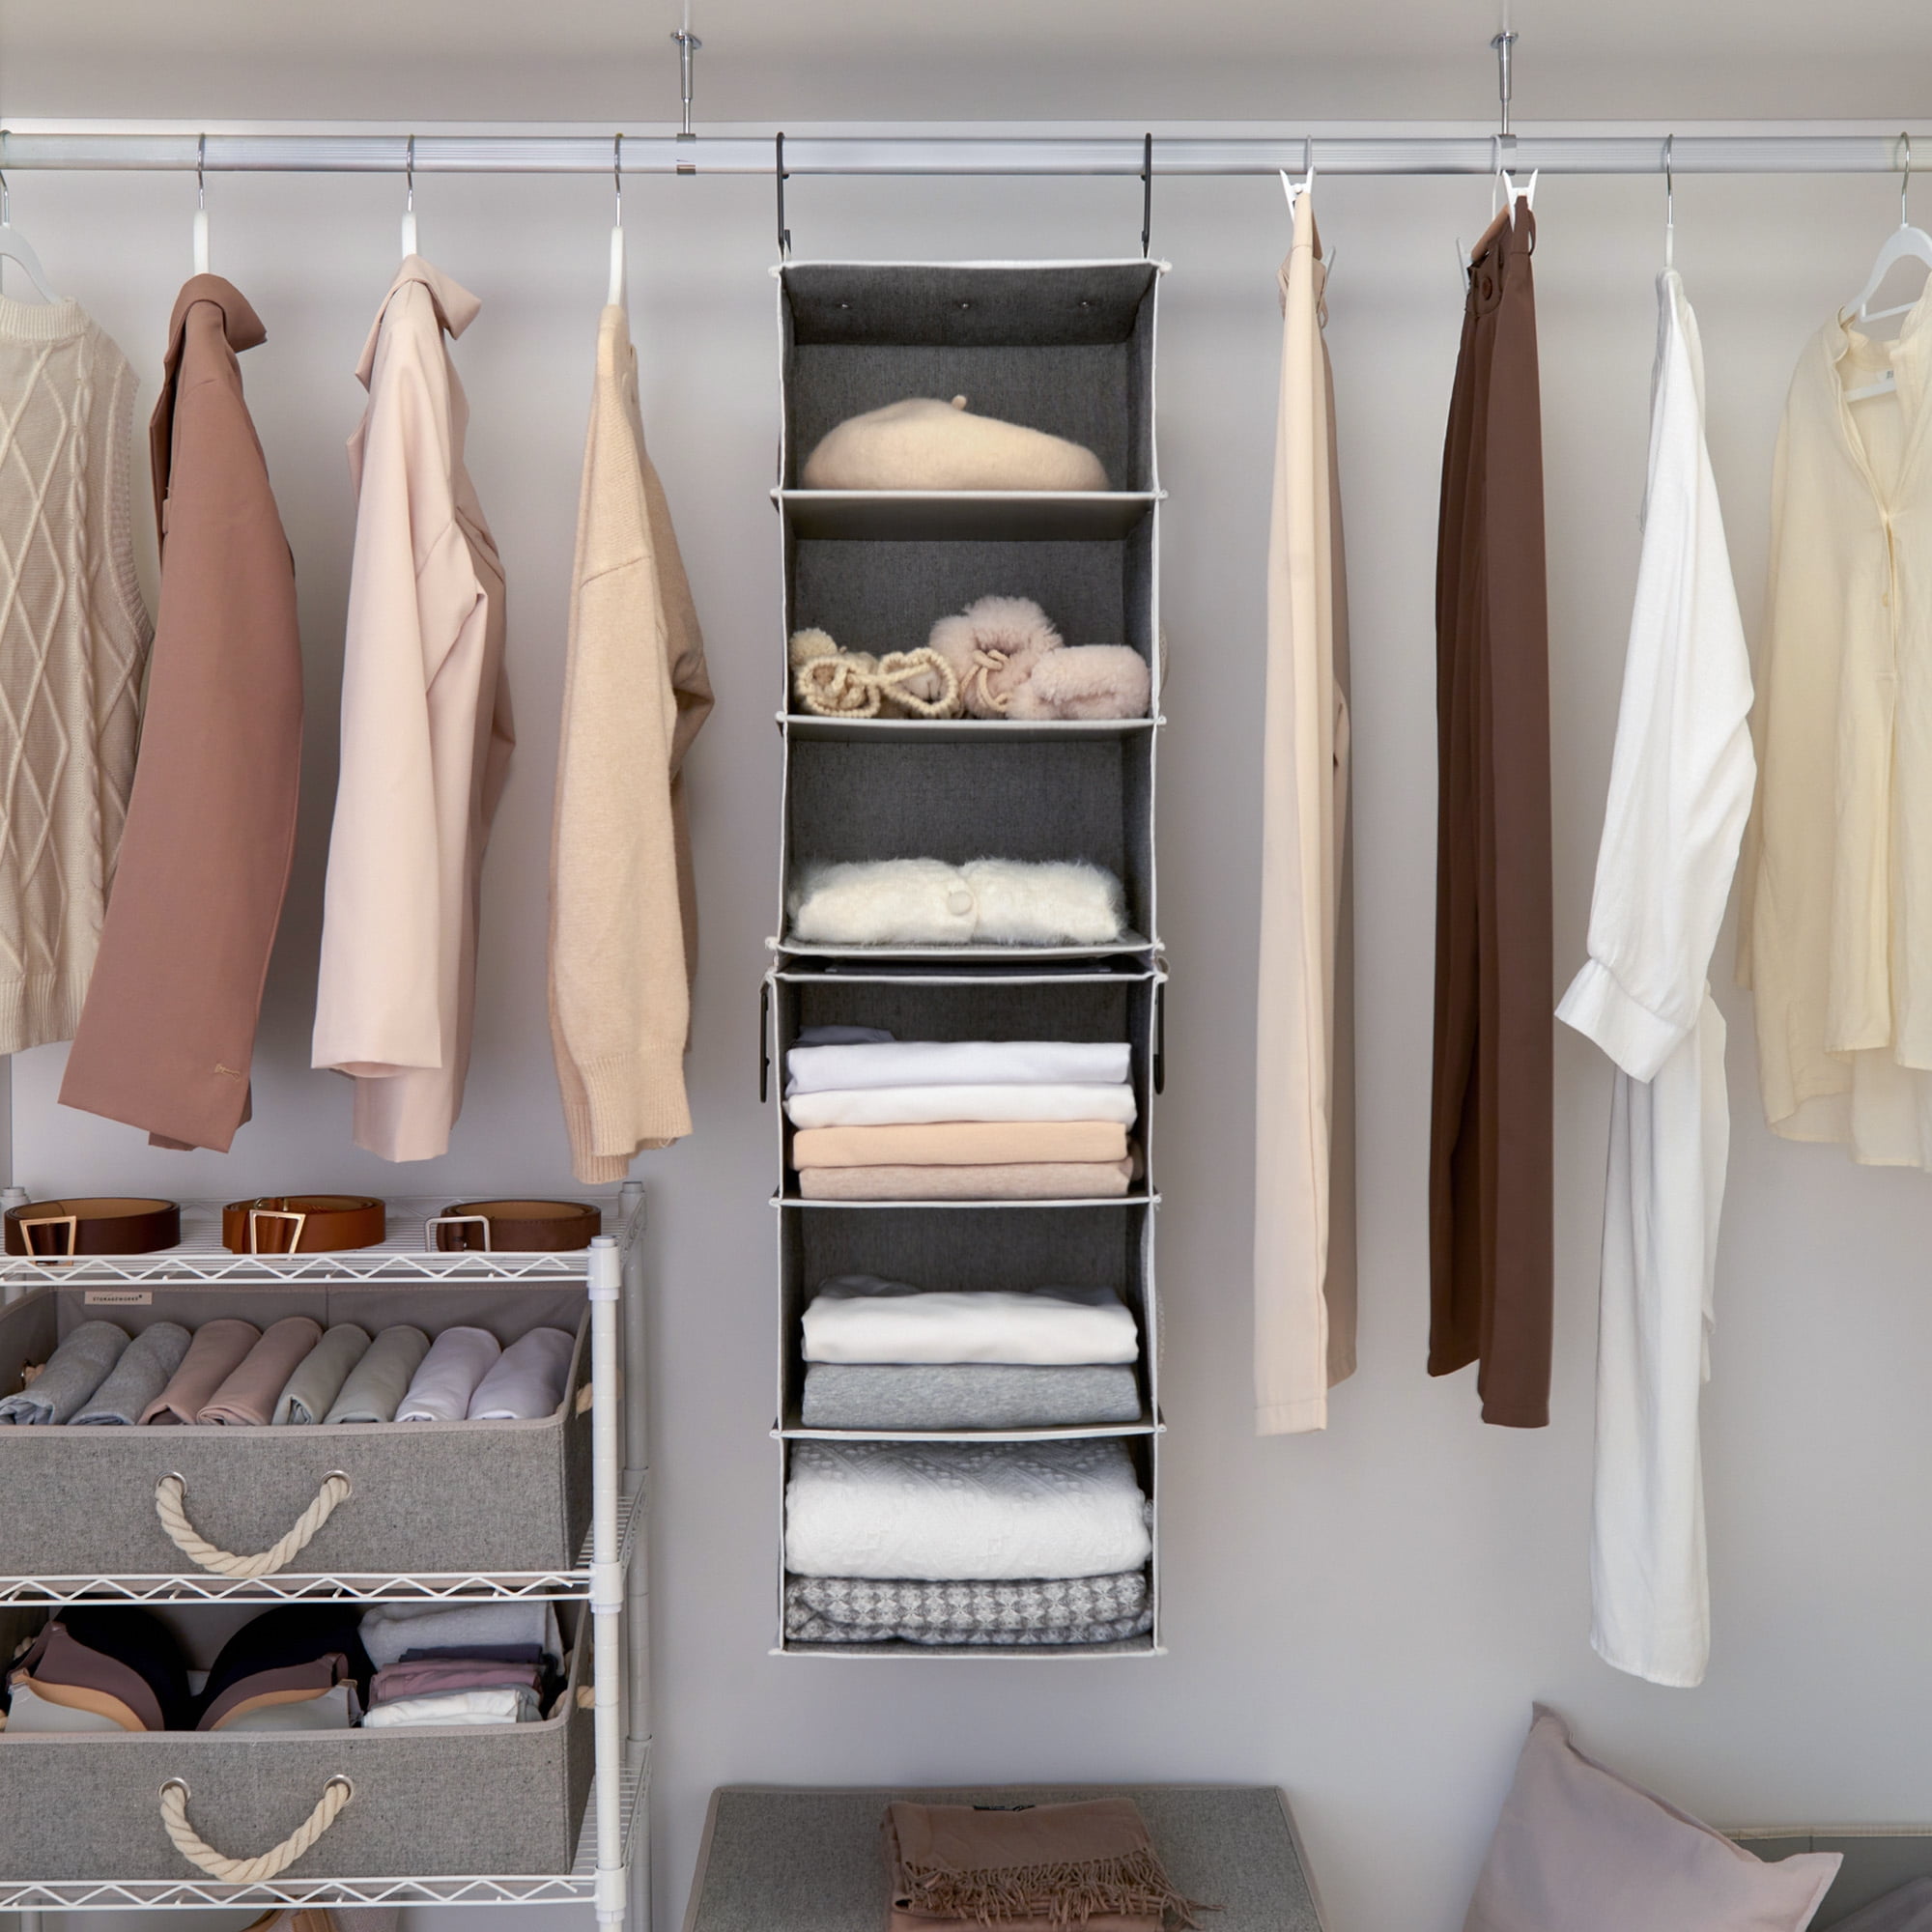 StorageWorks 6-Shelf Hanging Closet Organizer, Hanging Shelves for Closet,  Fabric, Mixing of Brown and Gray, 12 D x 12 W x 47 ¾ H